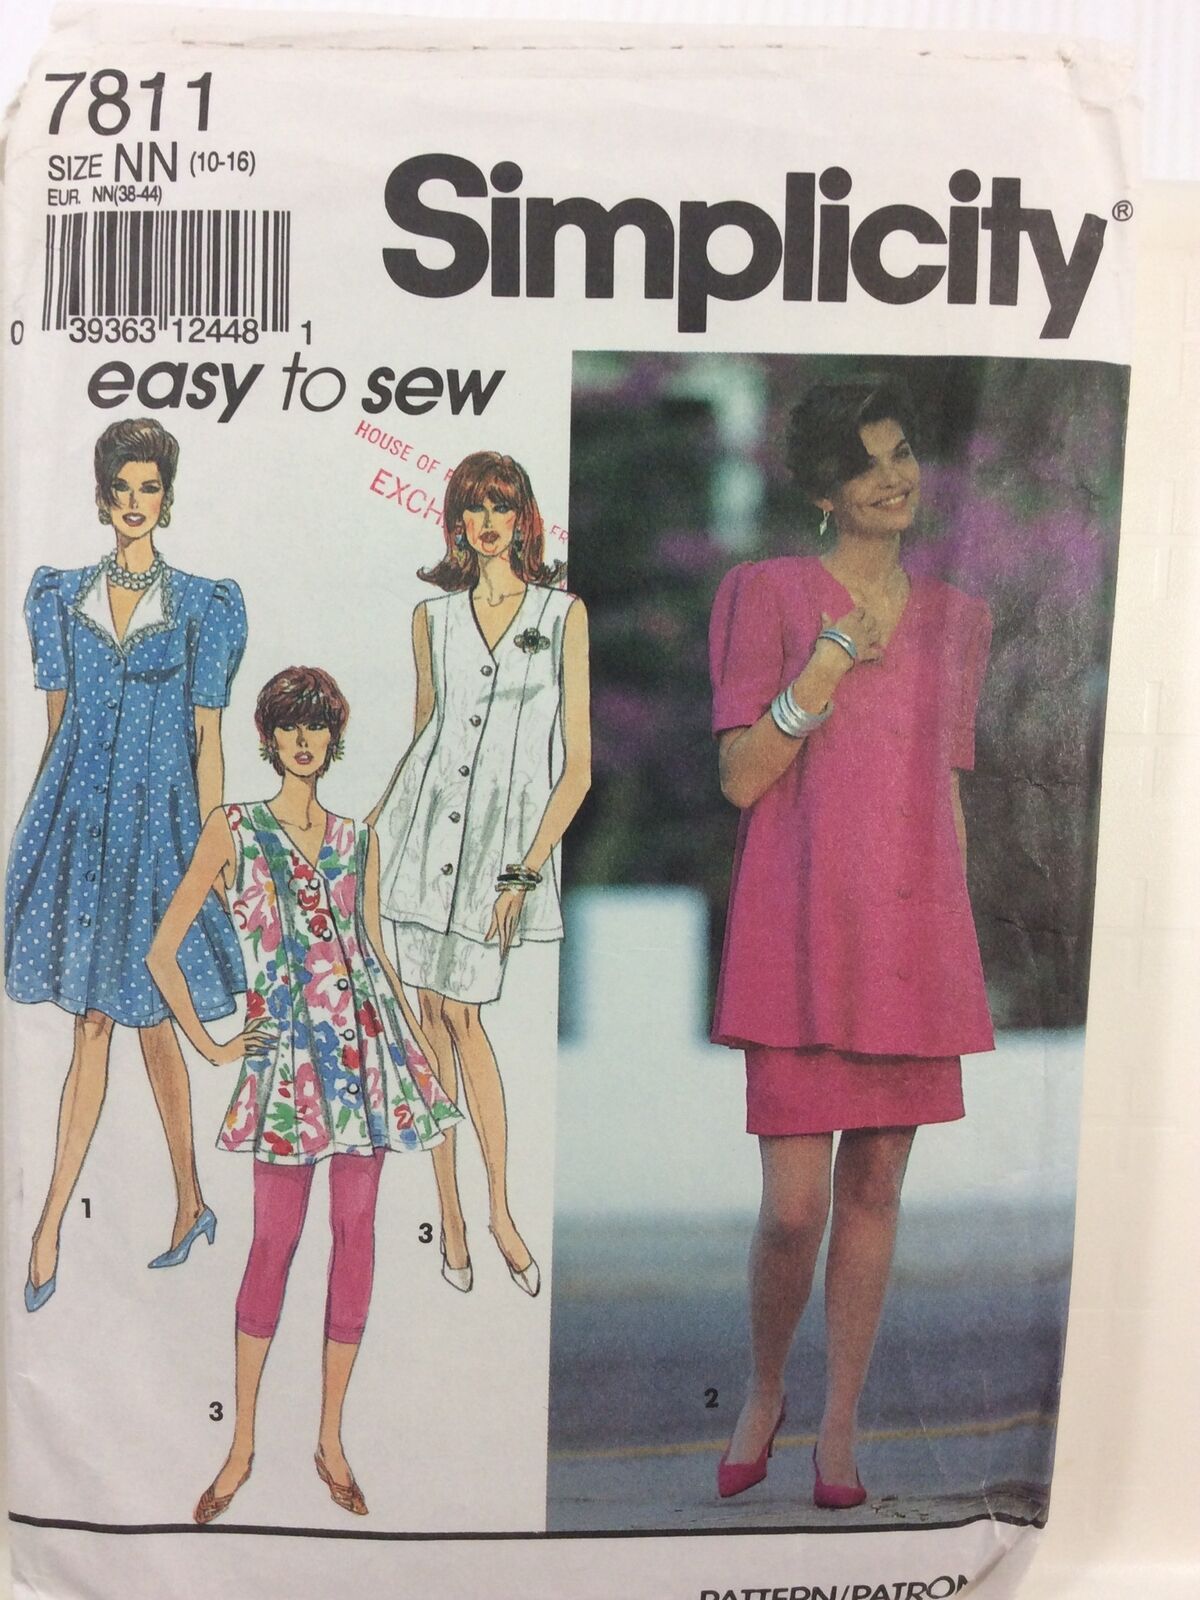 1992 Simplicity 7811 VTG Sewing Pattern Maternity Leggings Skirt Size NN 10 16